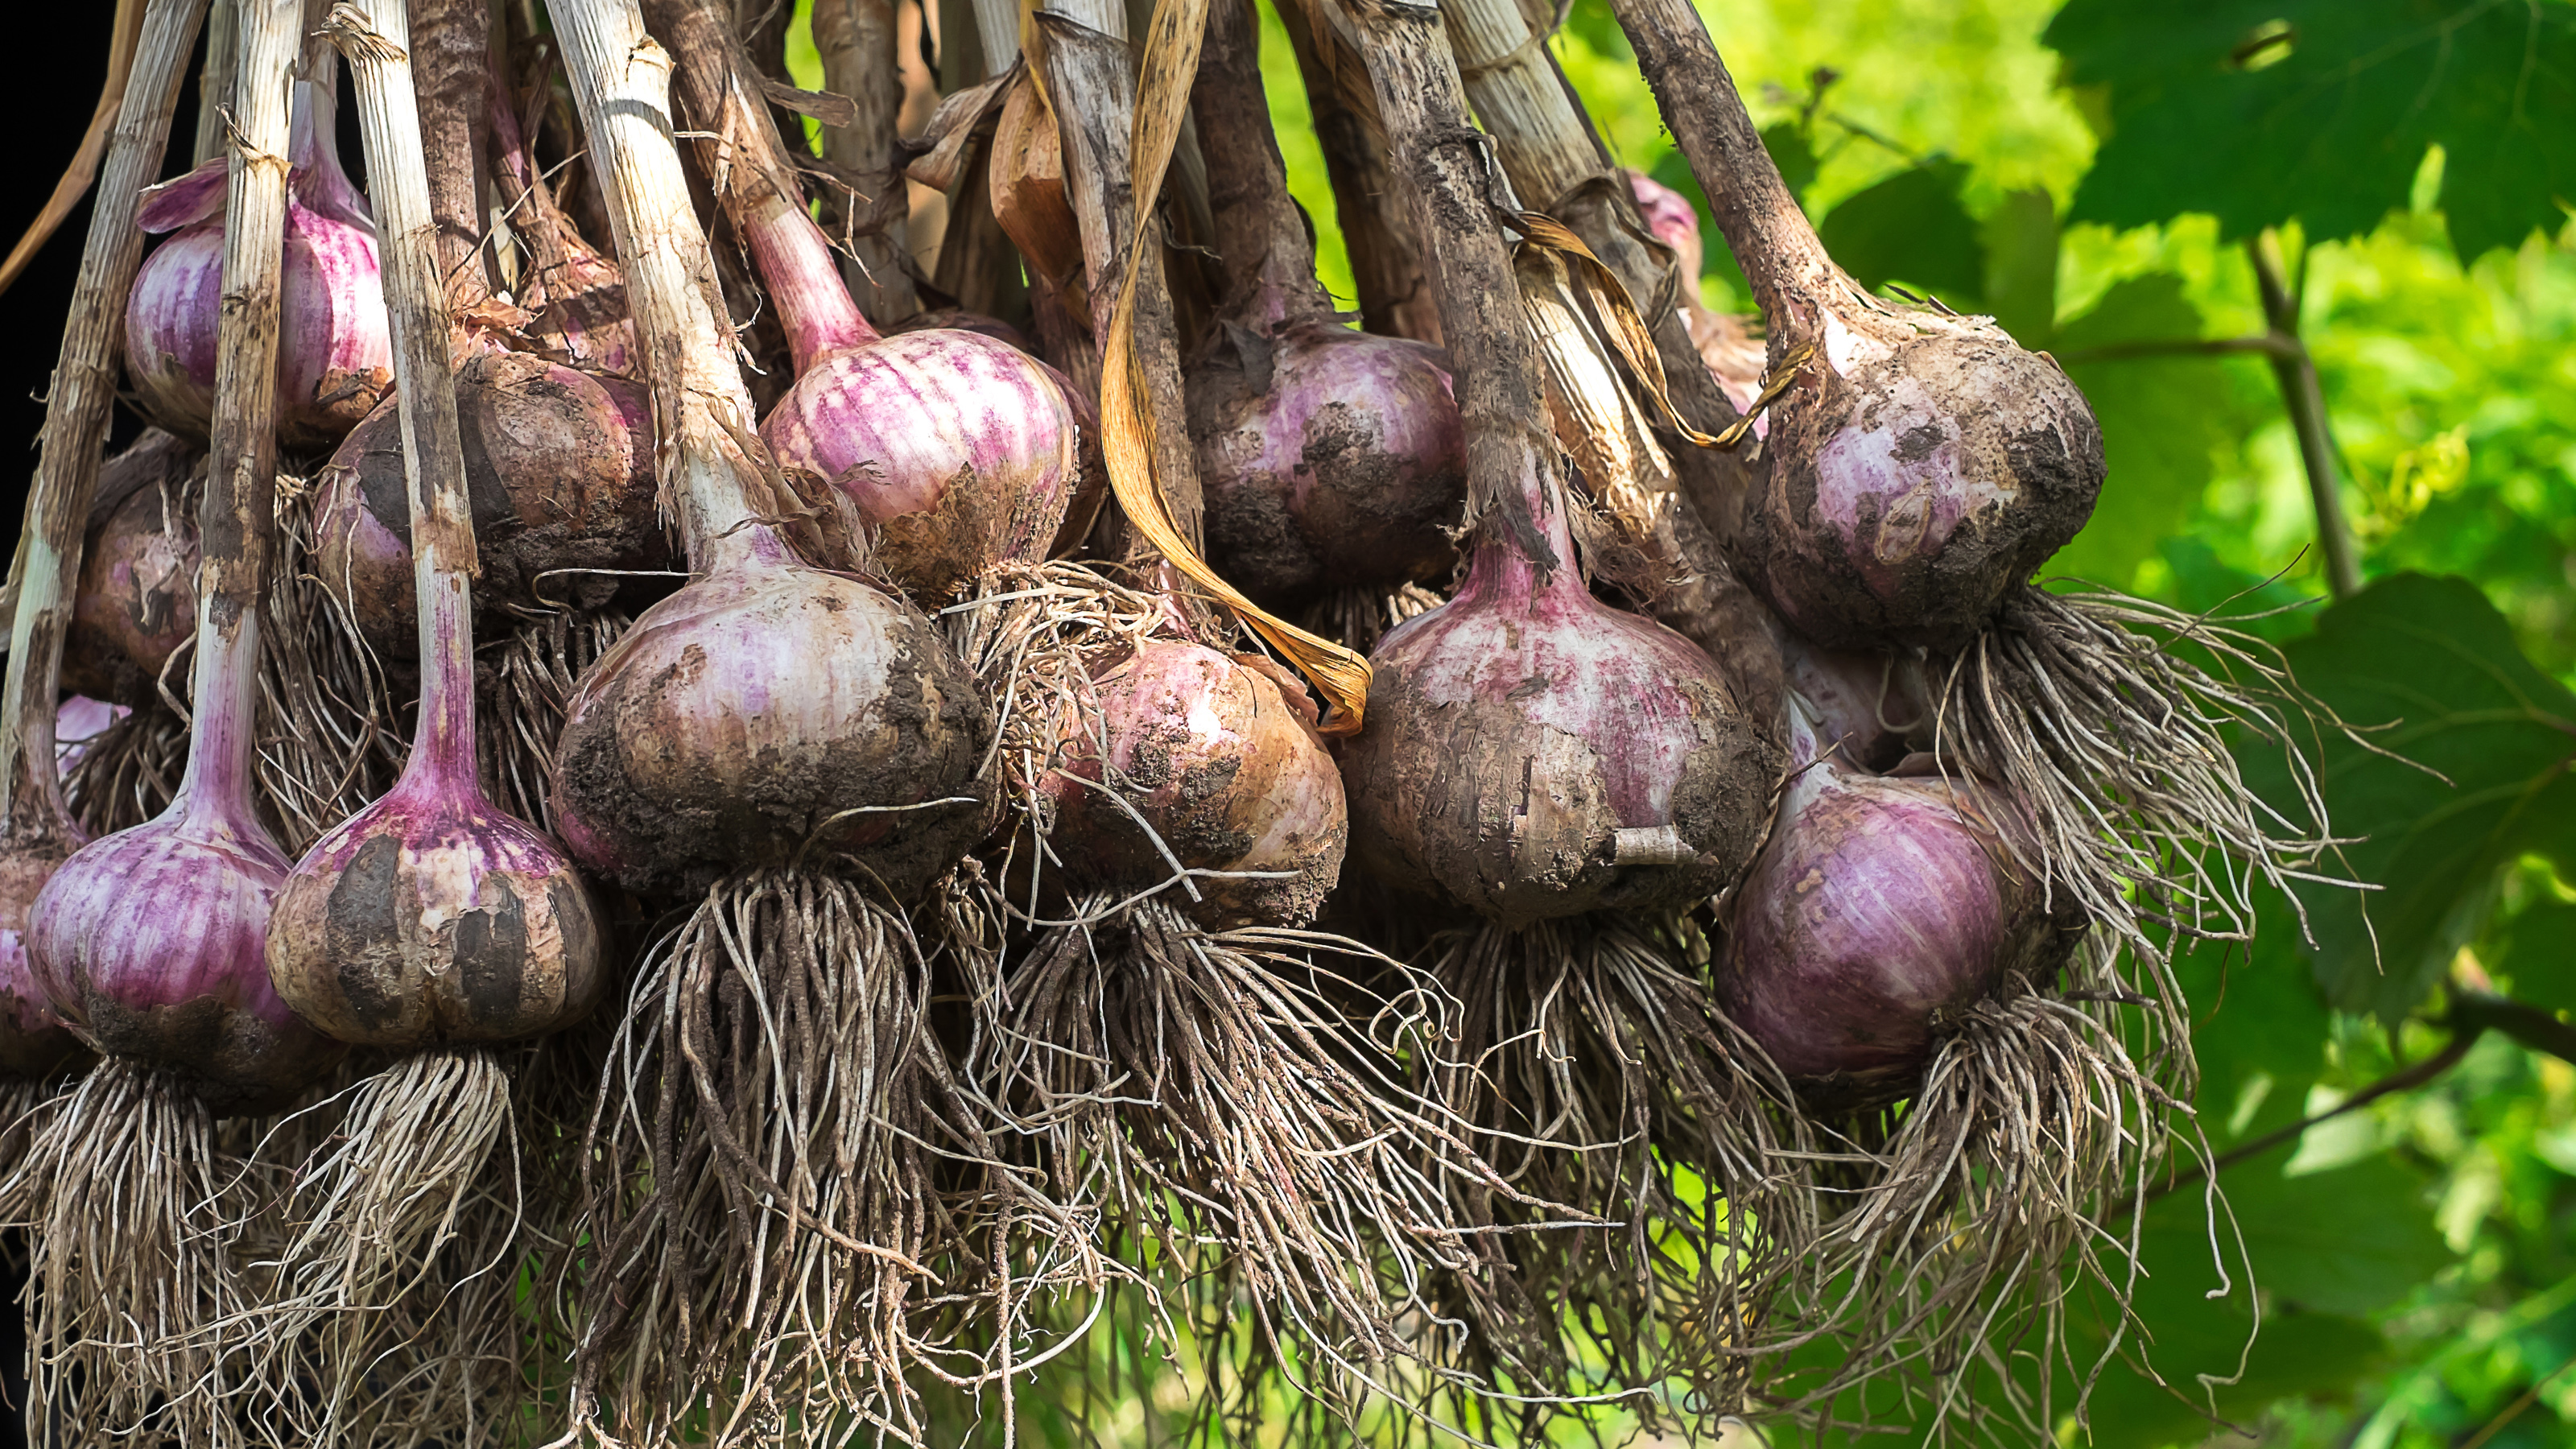 Image of Garlic bad companion plant for onions